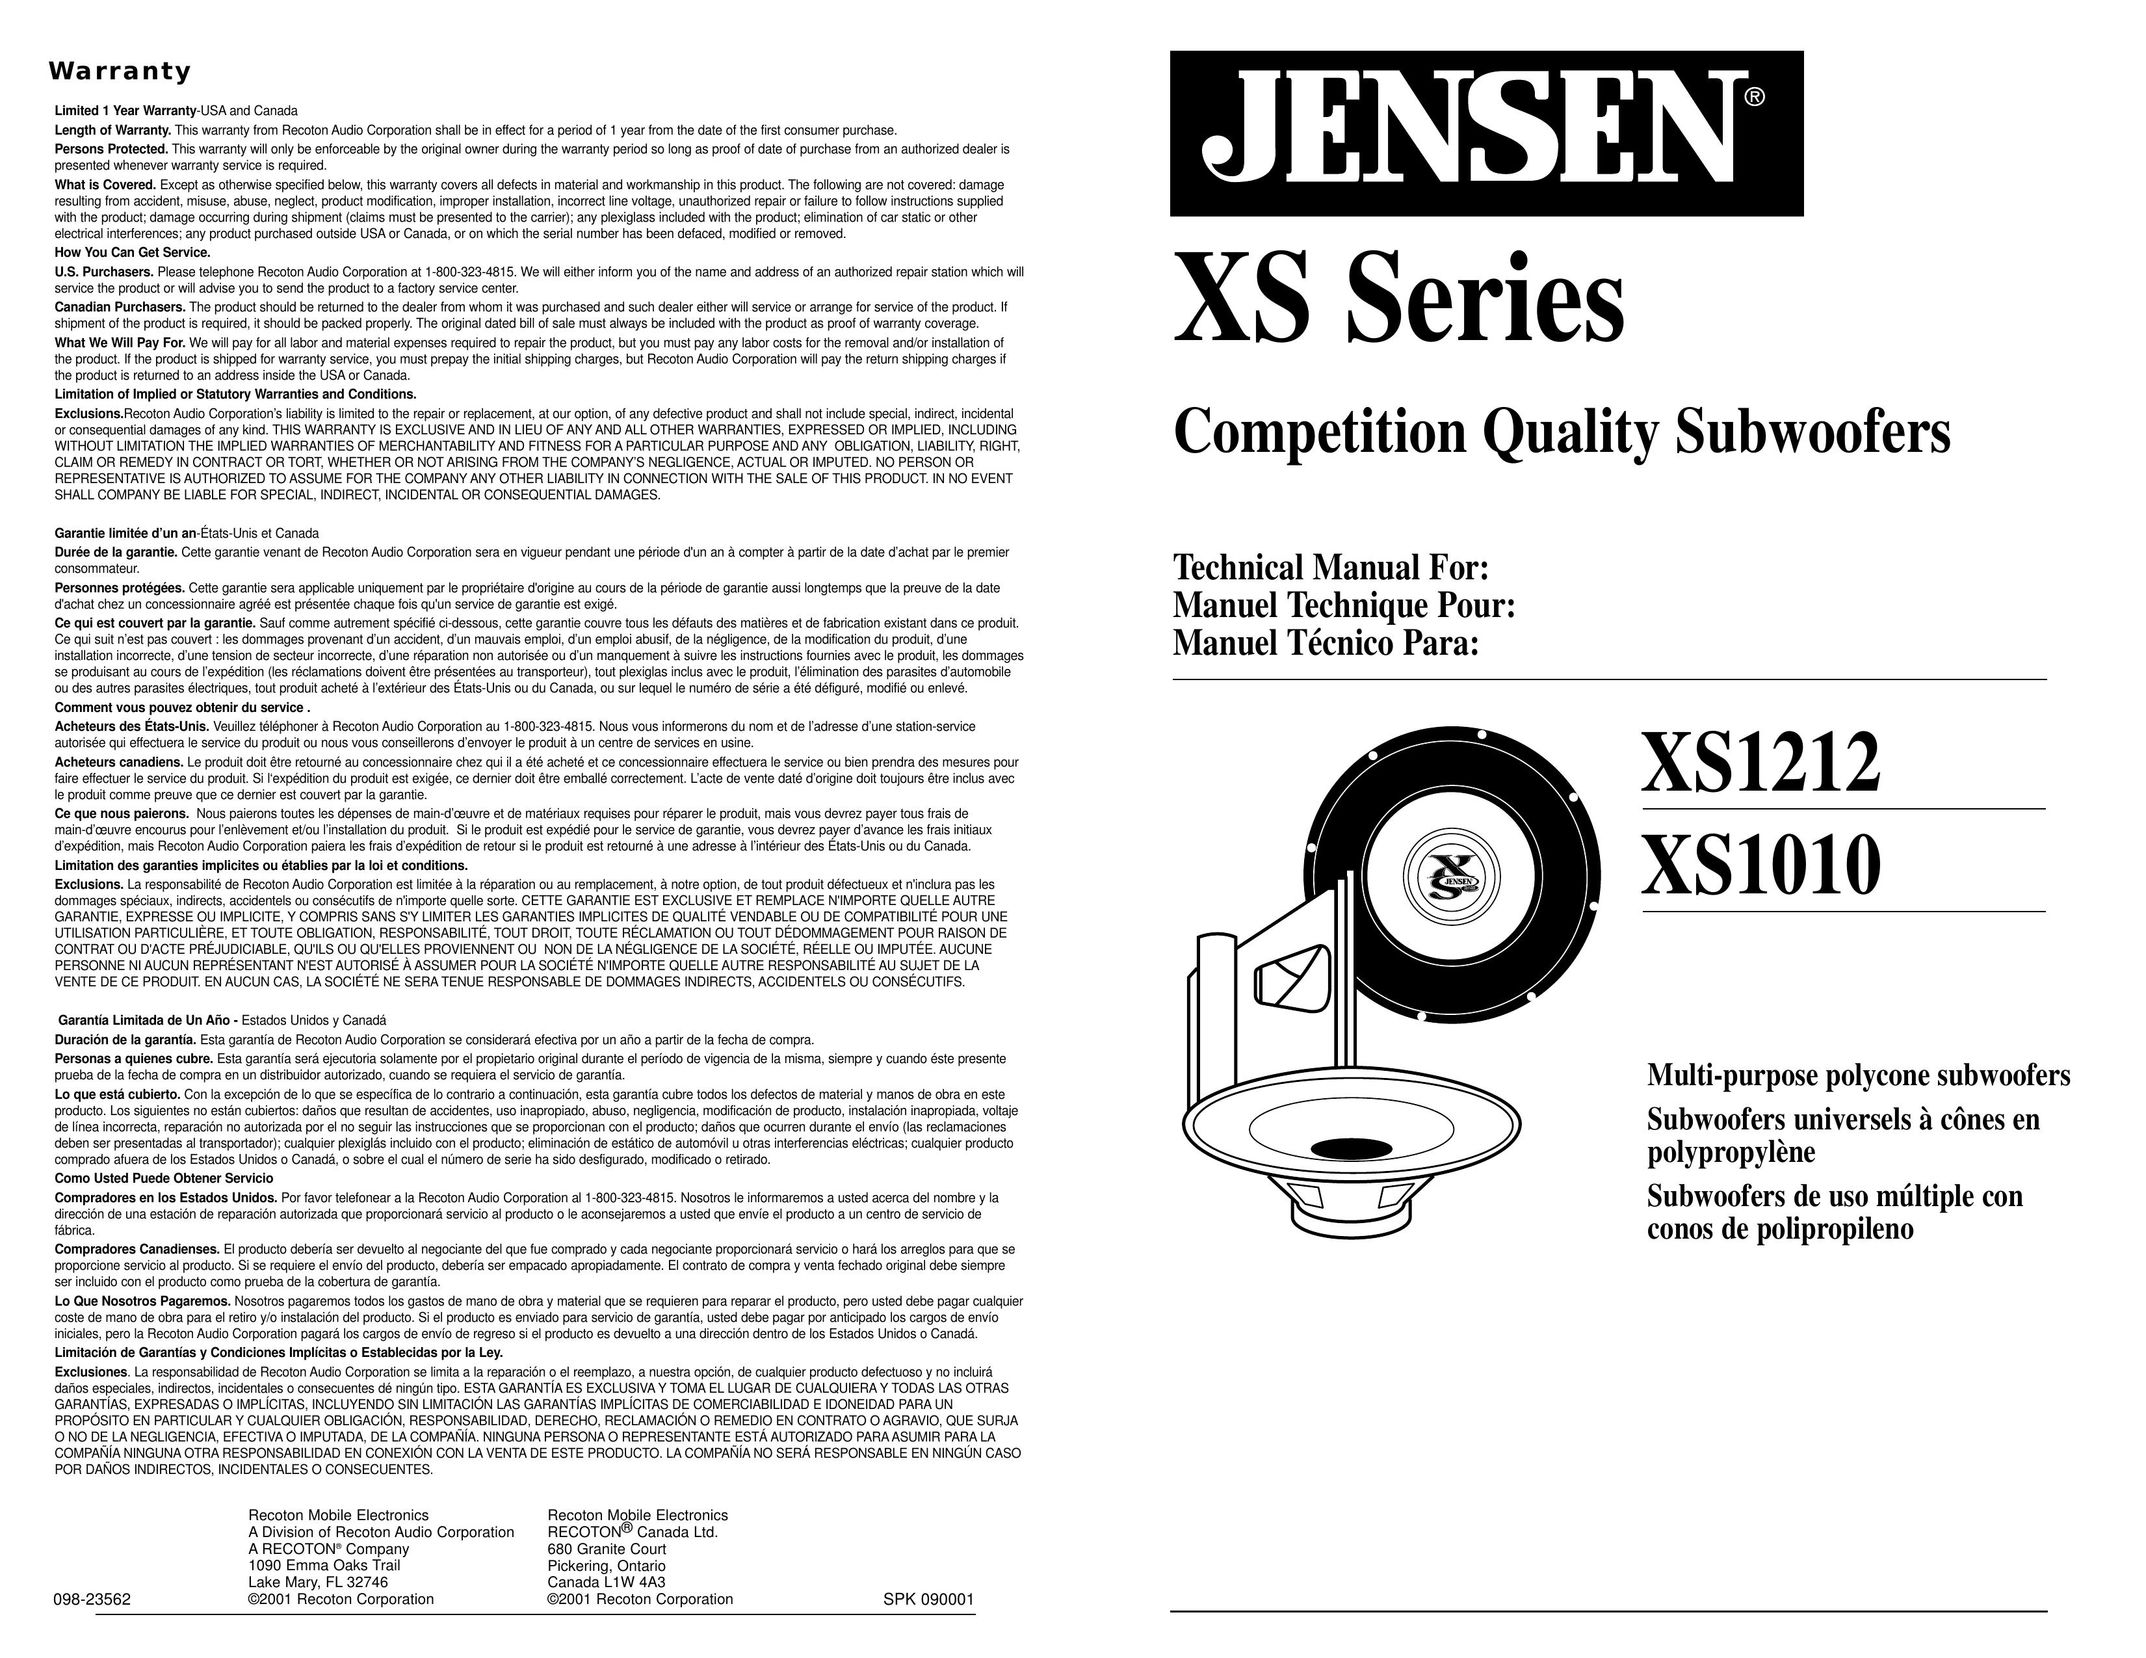 Jensen XS1010 Speaker User Manual